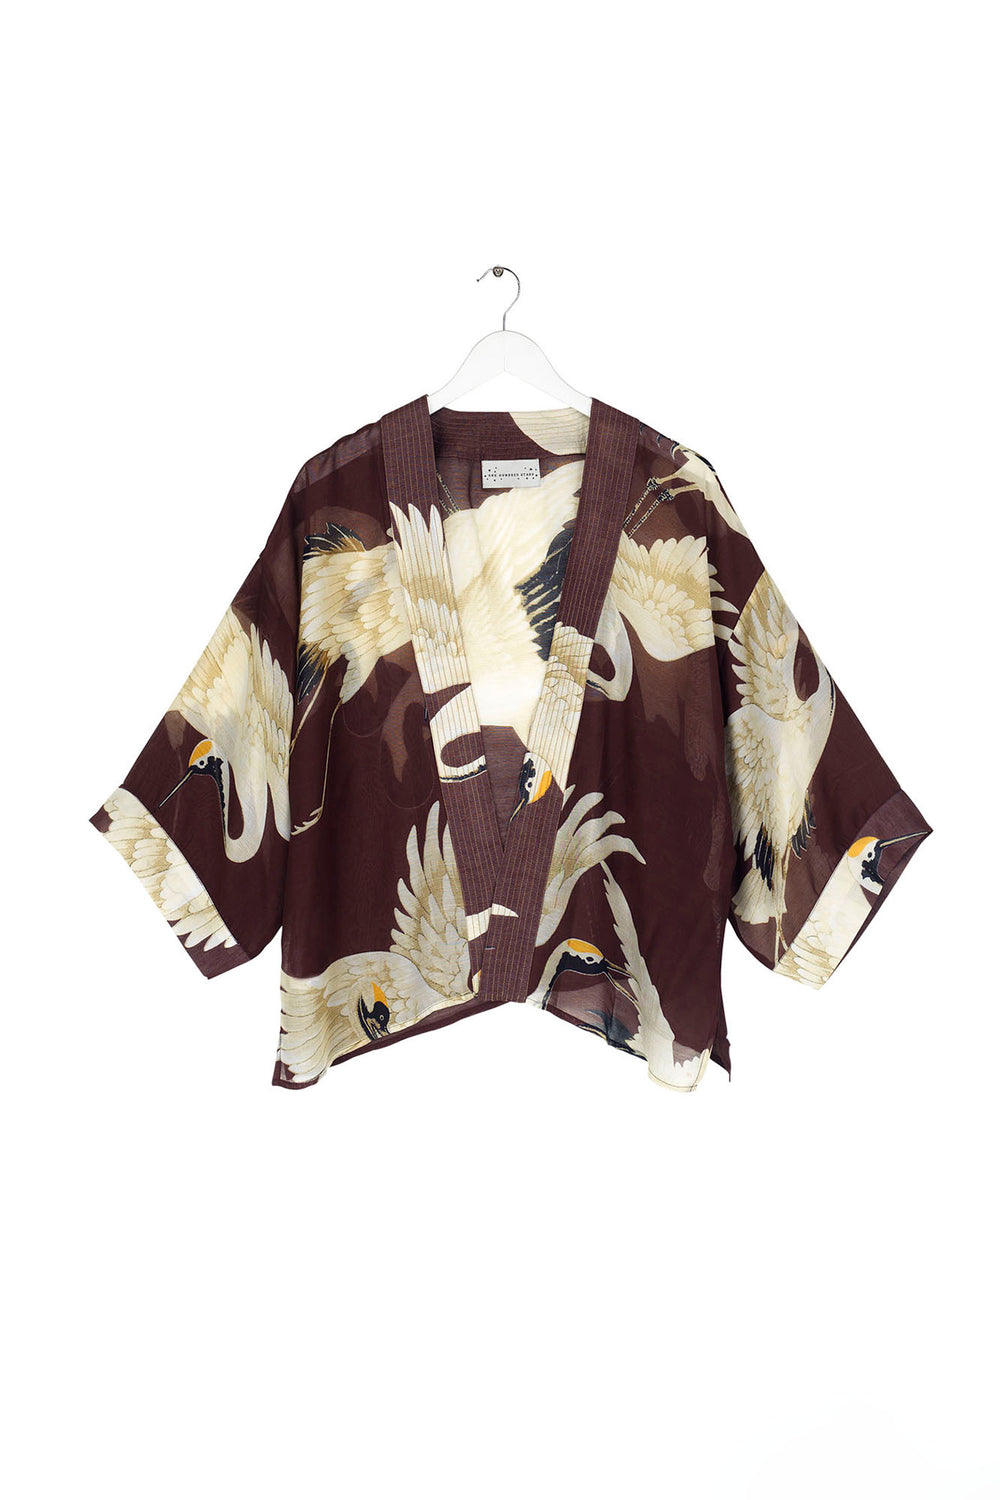 ladies winter short kimono jacket  burgundy background with stork bird print by One Hundred Stars